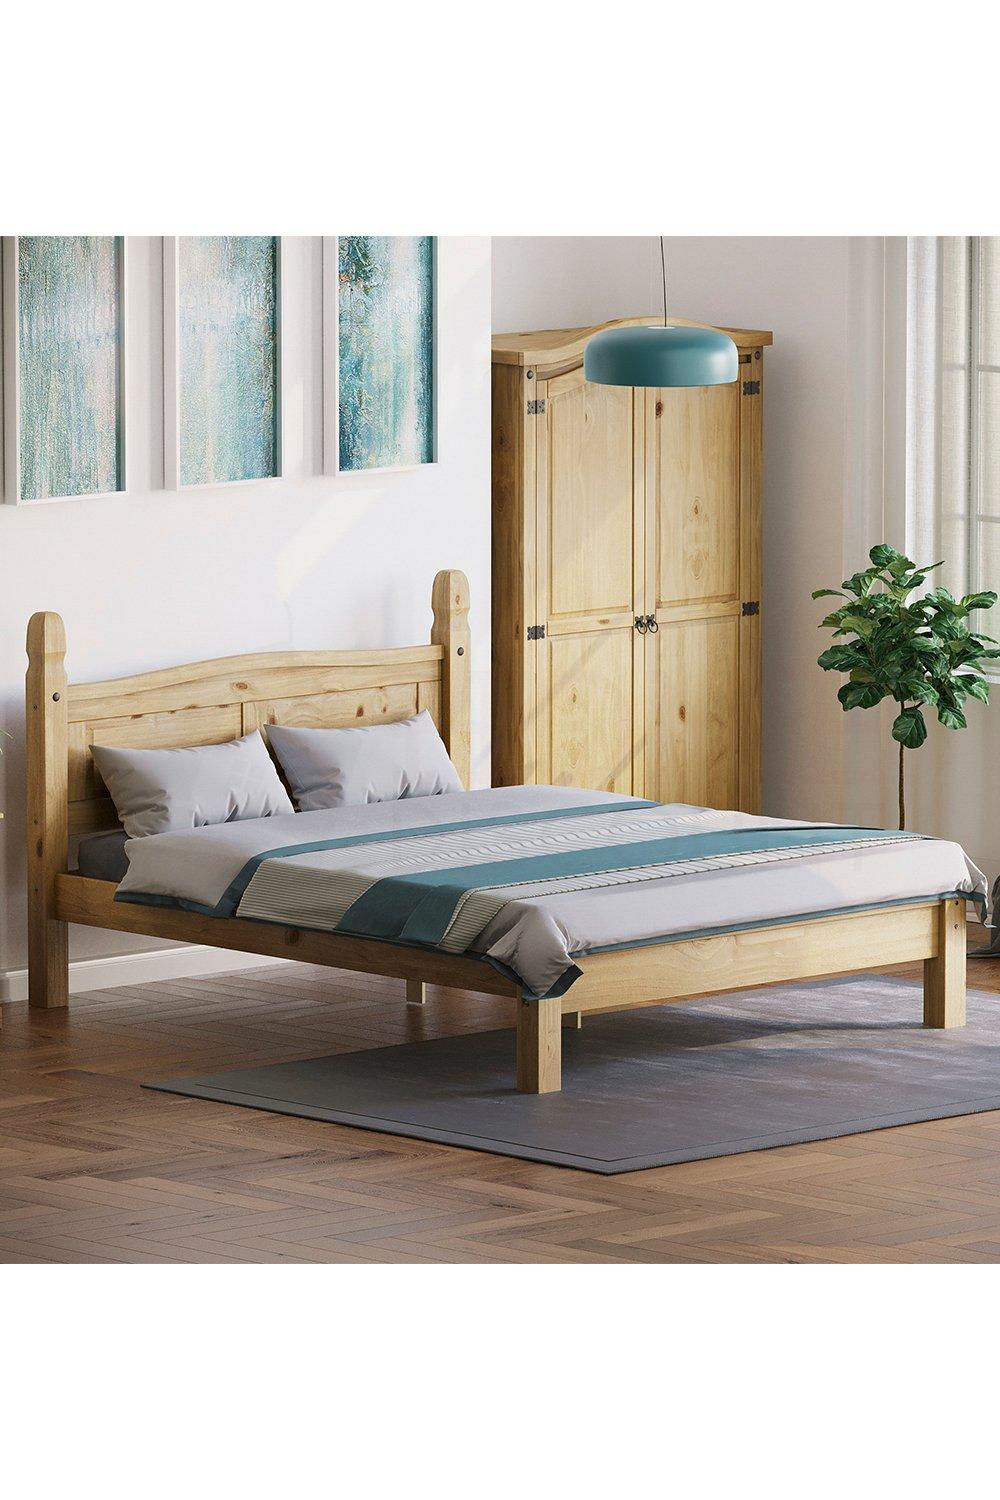 Home Discount Vida Designs Corona King Size Bed Low Foot End Bedroom Furniture